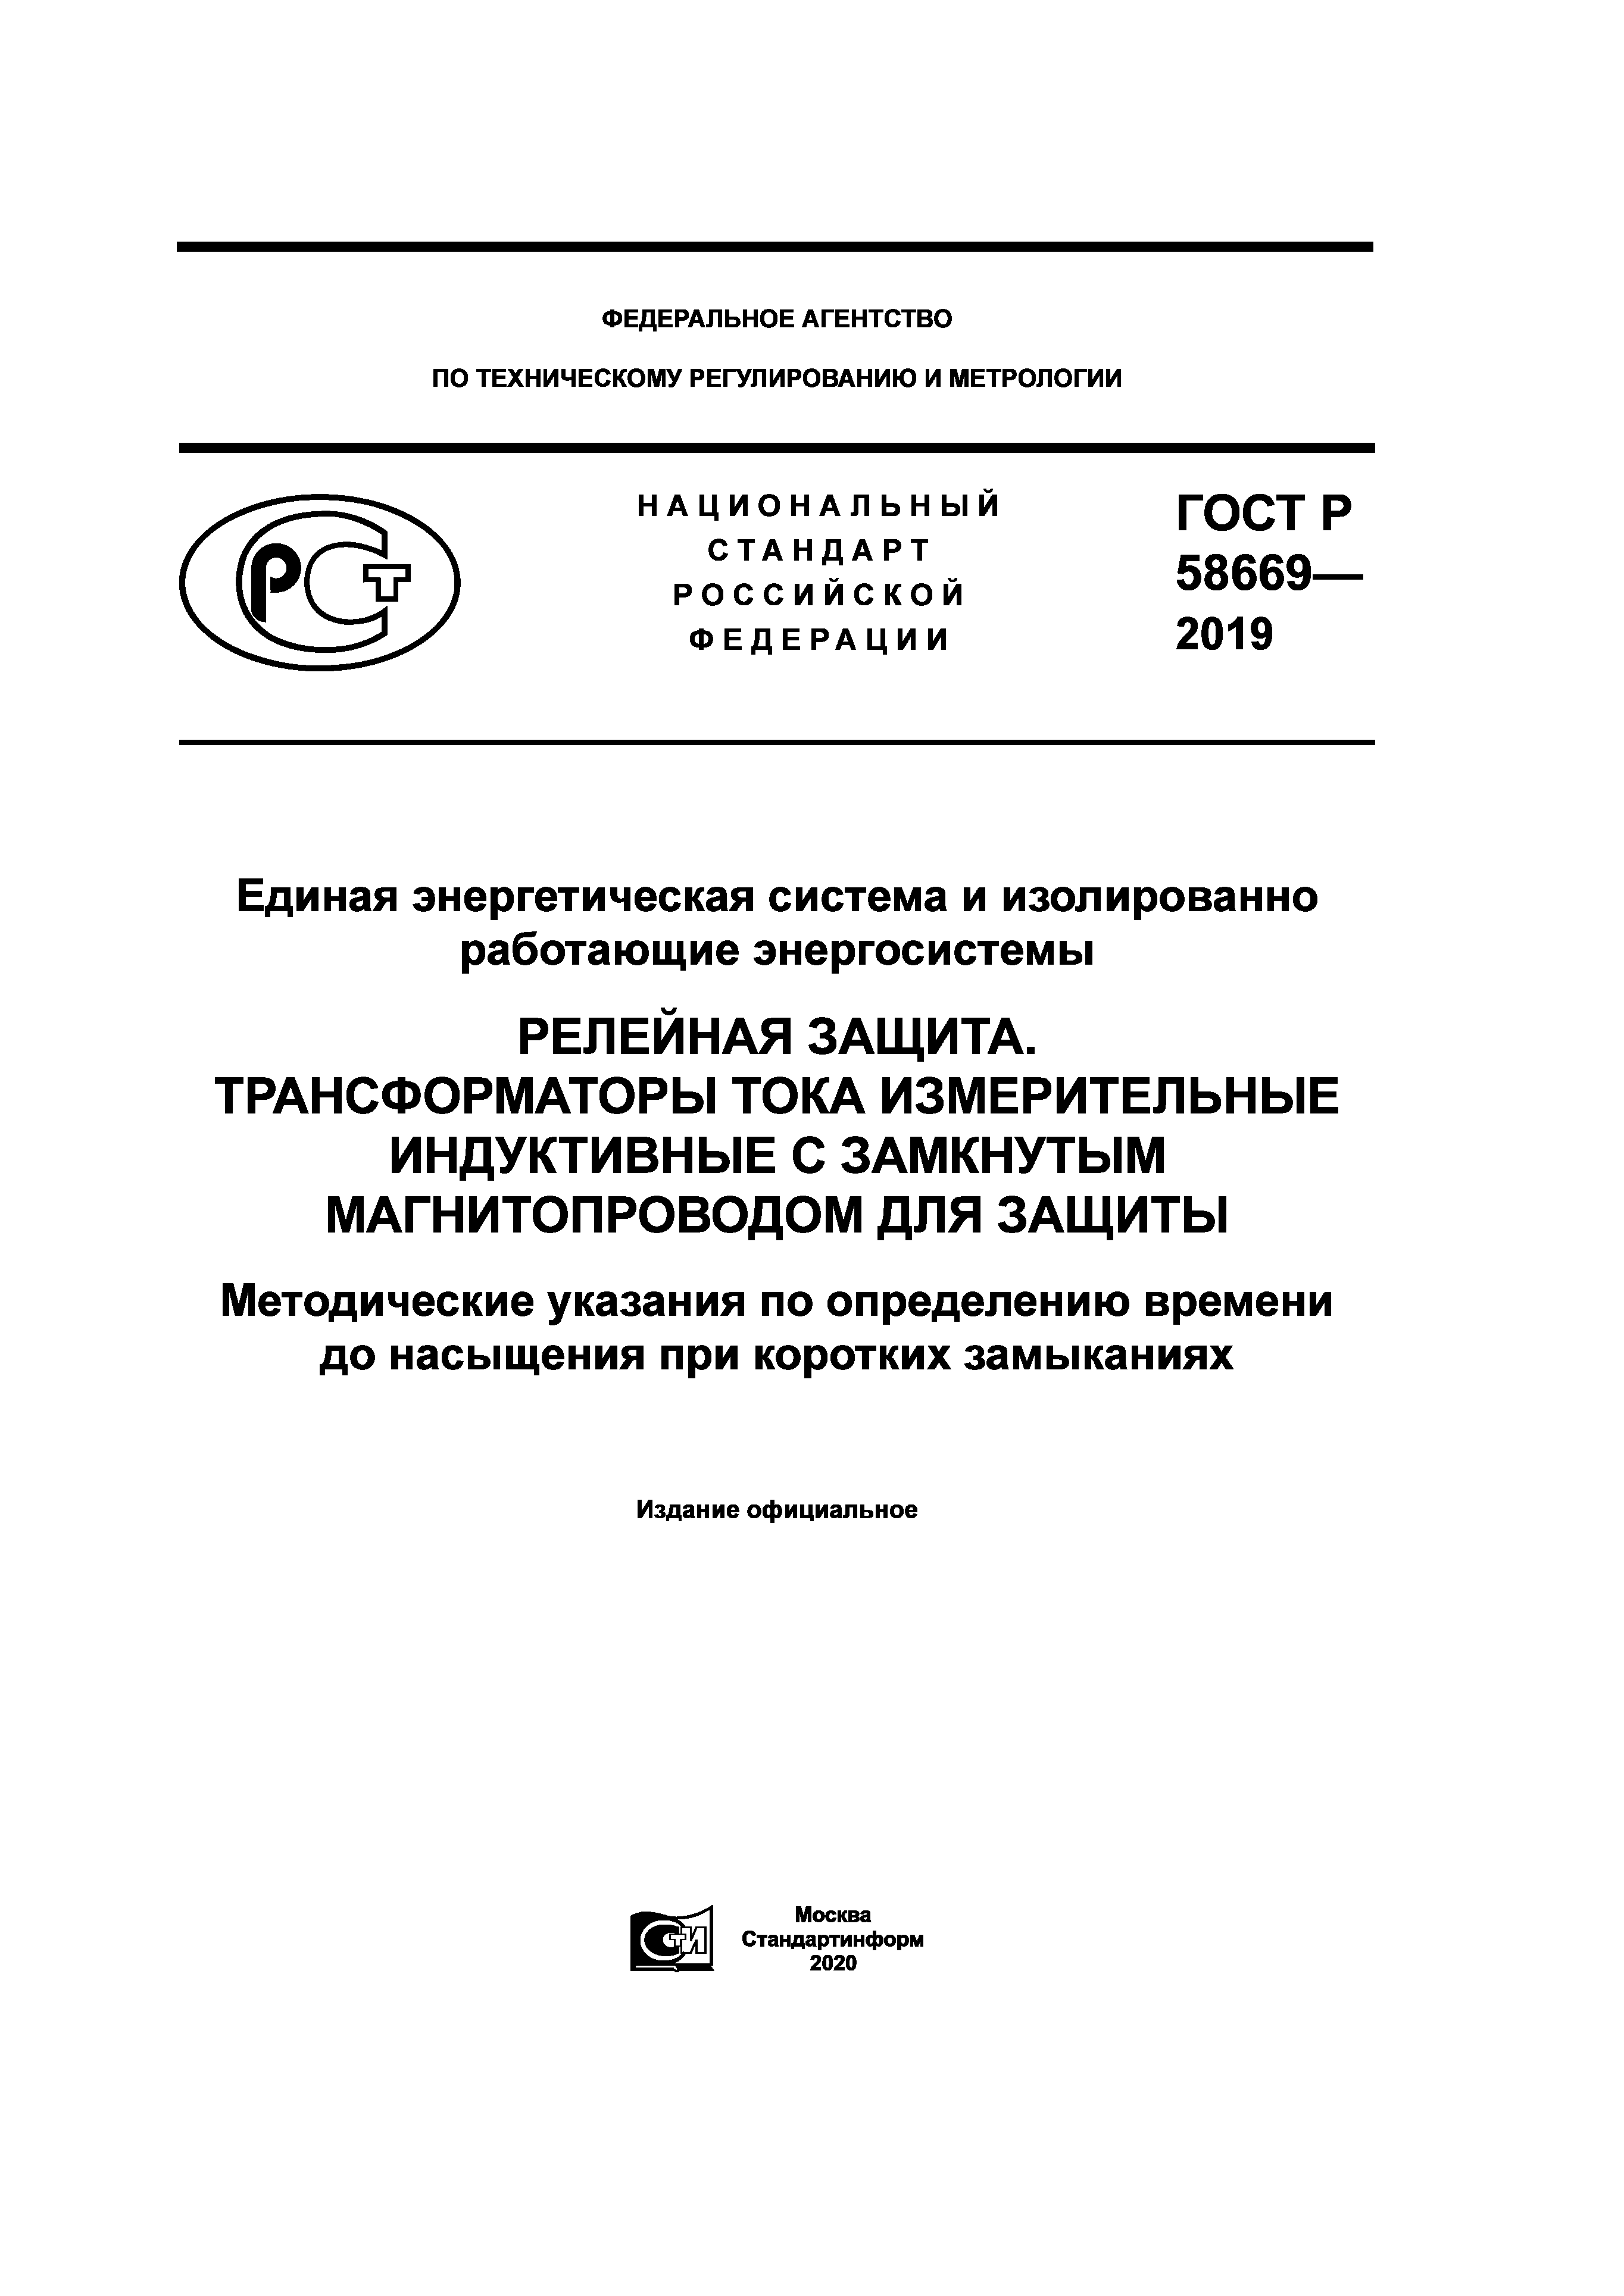 ГОСТ Р 58669-2019